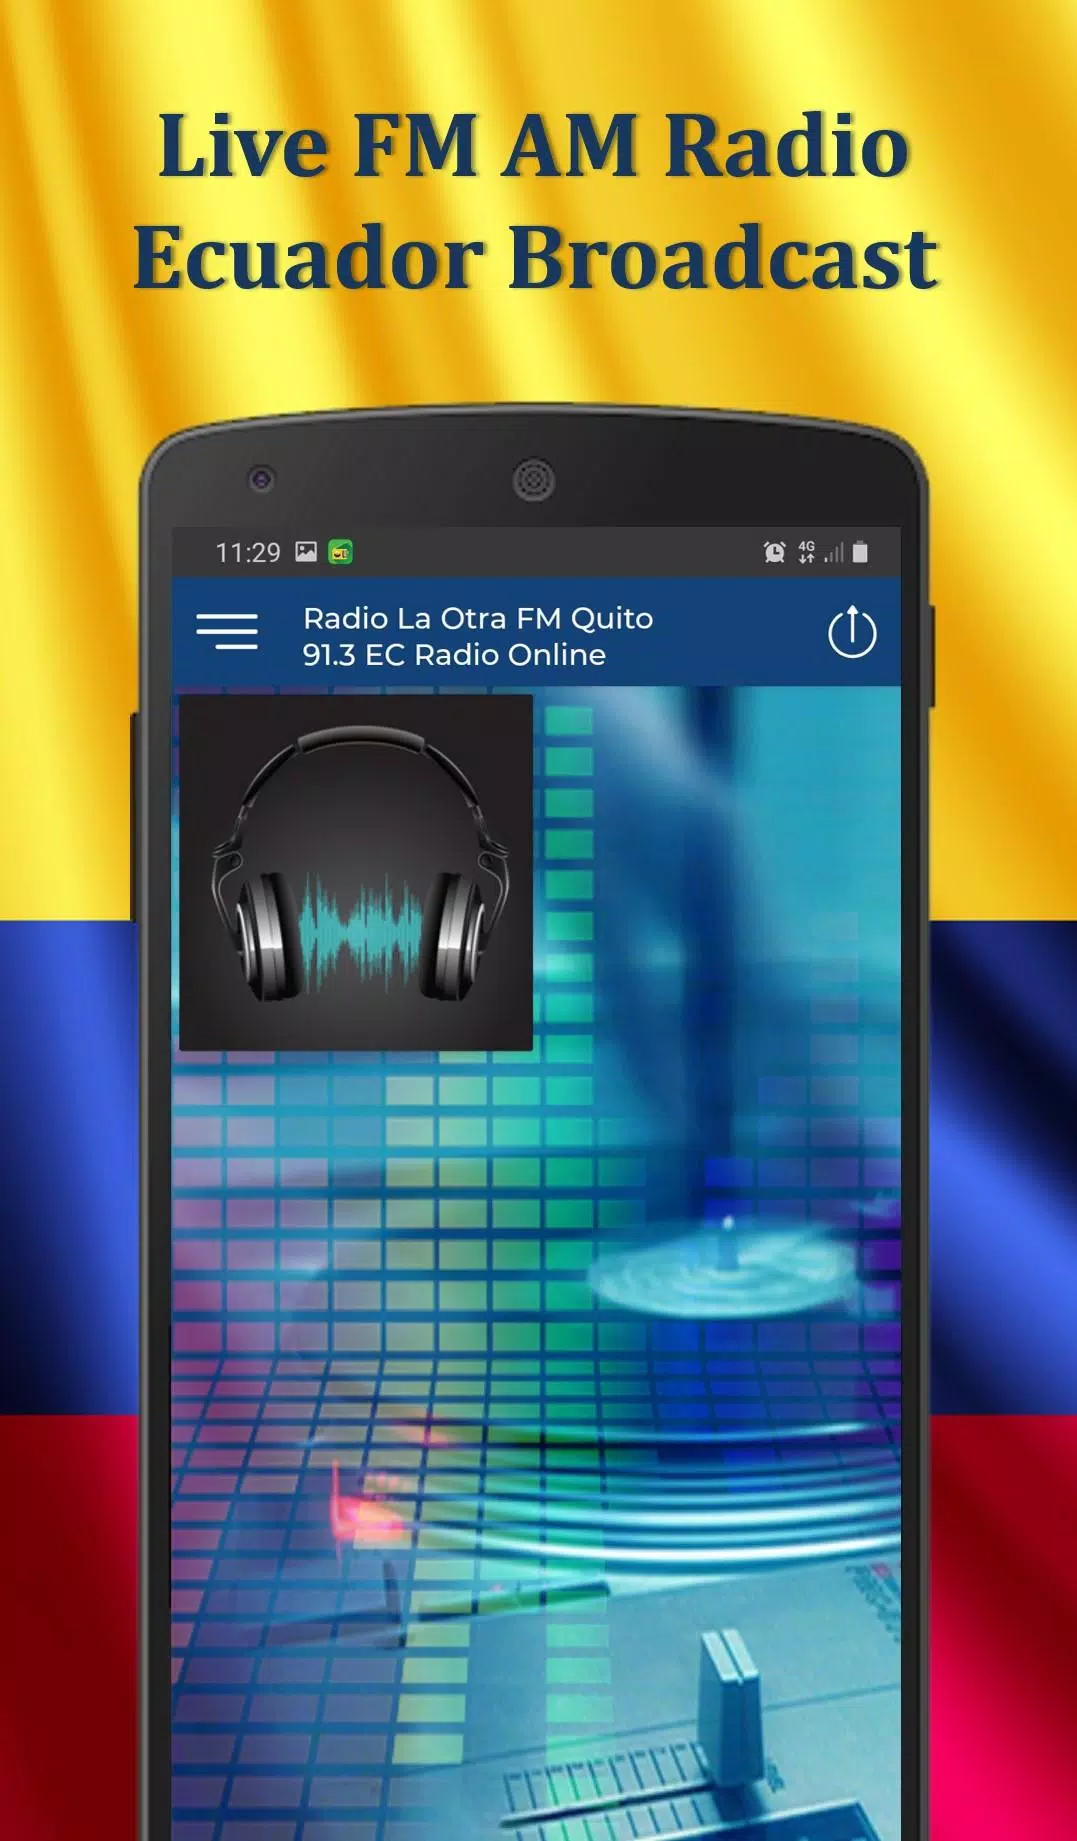 Radio La Otra FM Quito 91.3 - EC Radio Online for Android - APK Download